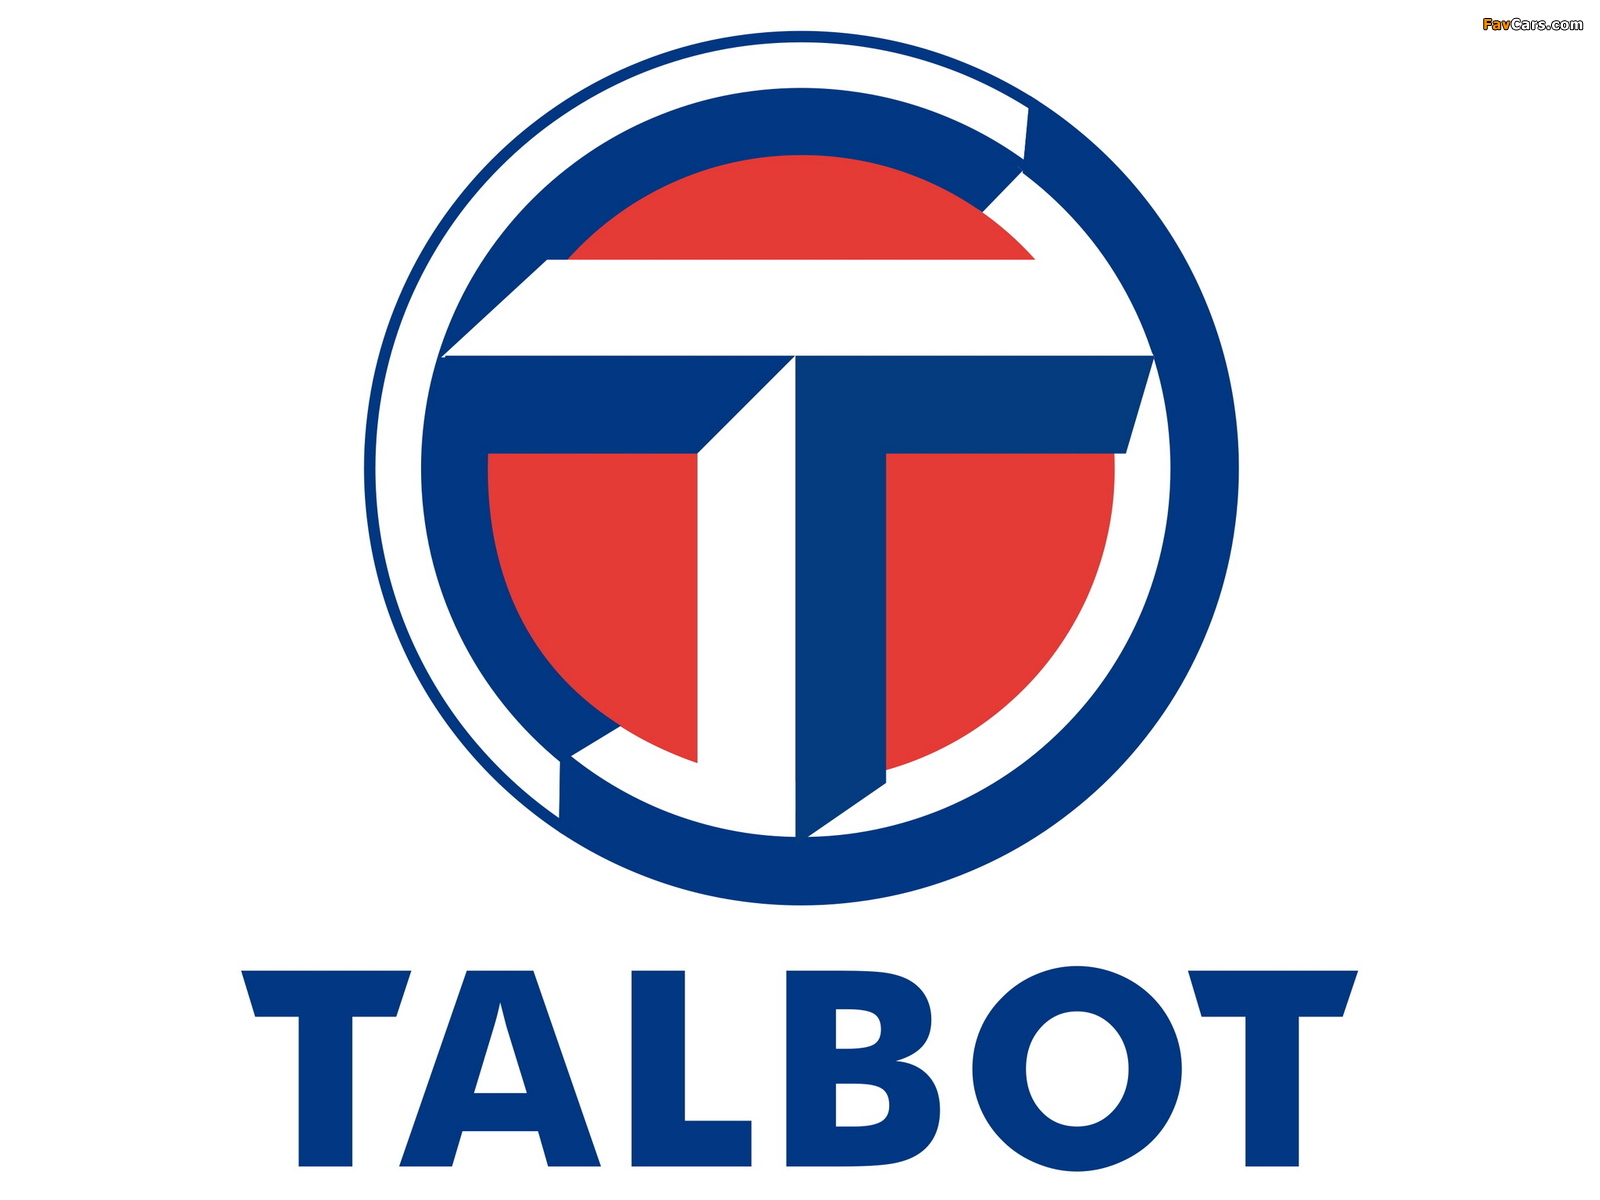 Talbot images (1600 x 1200)